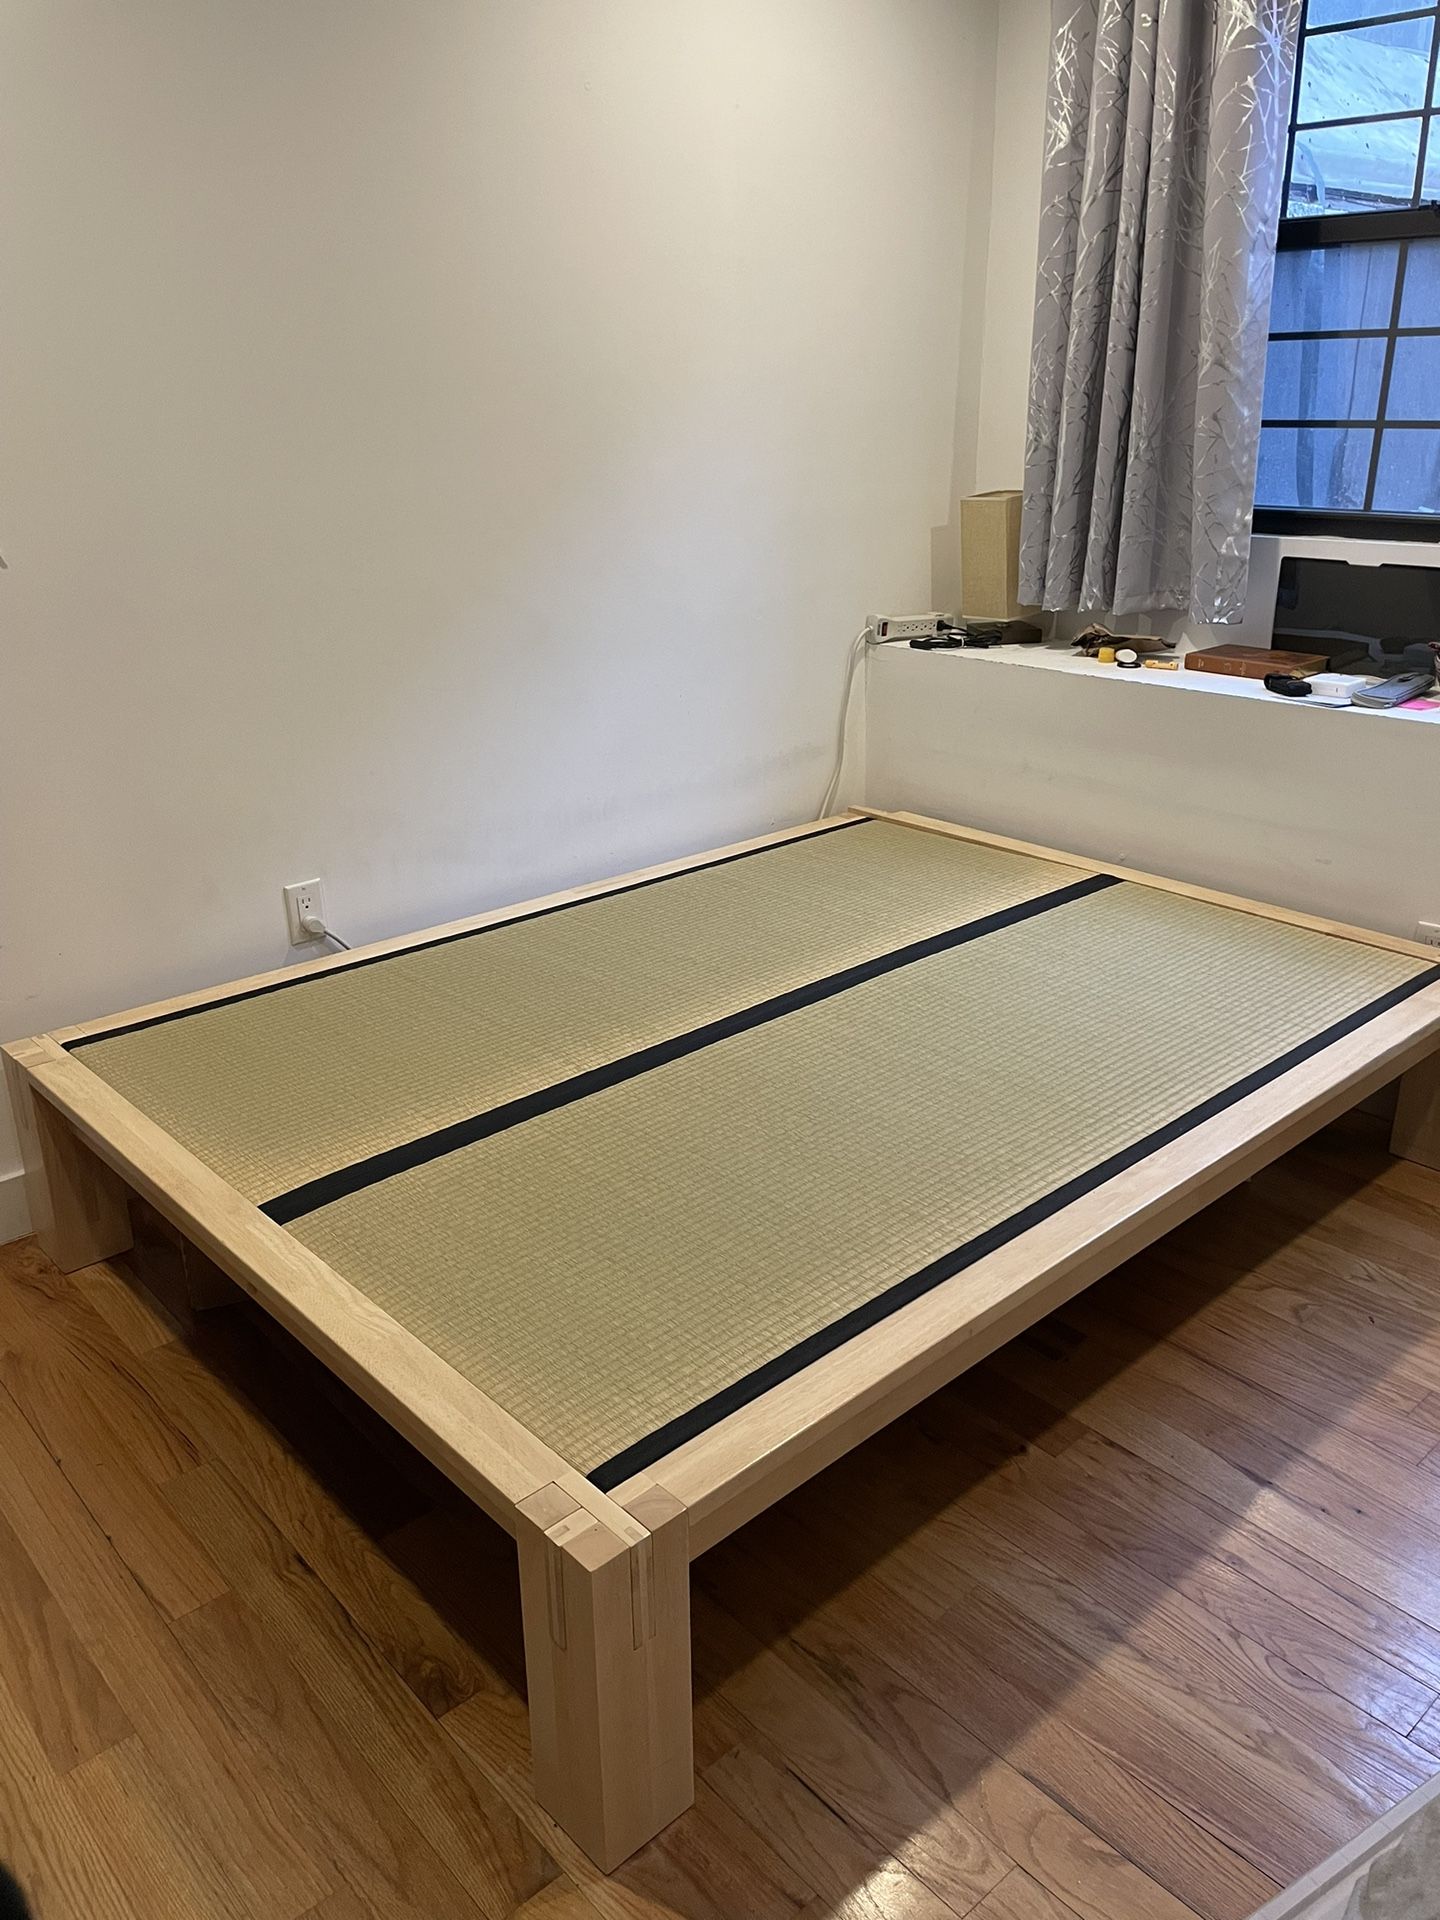 Japanese bed Tatami Mat Wooden Frame full Mattress 